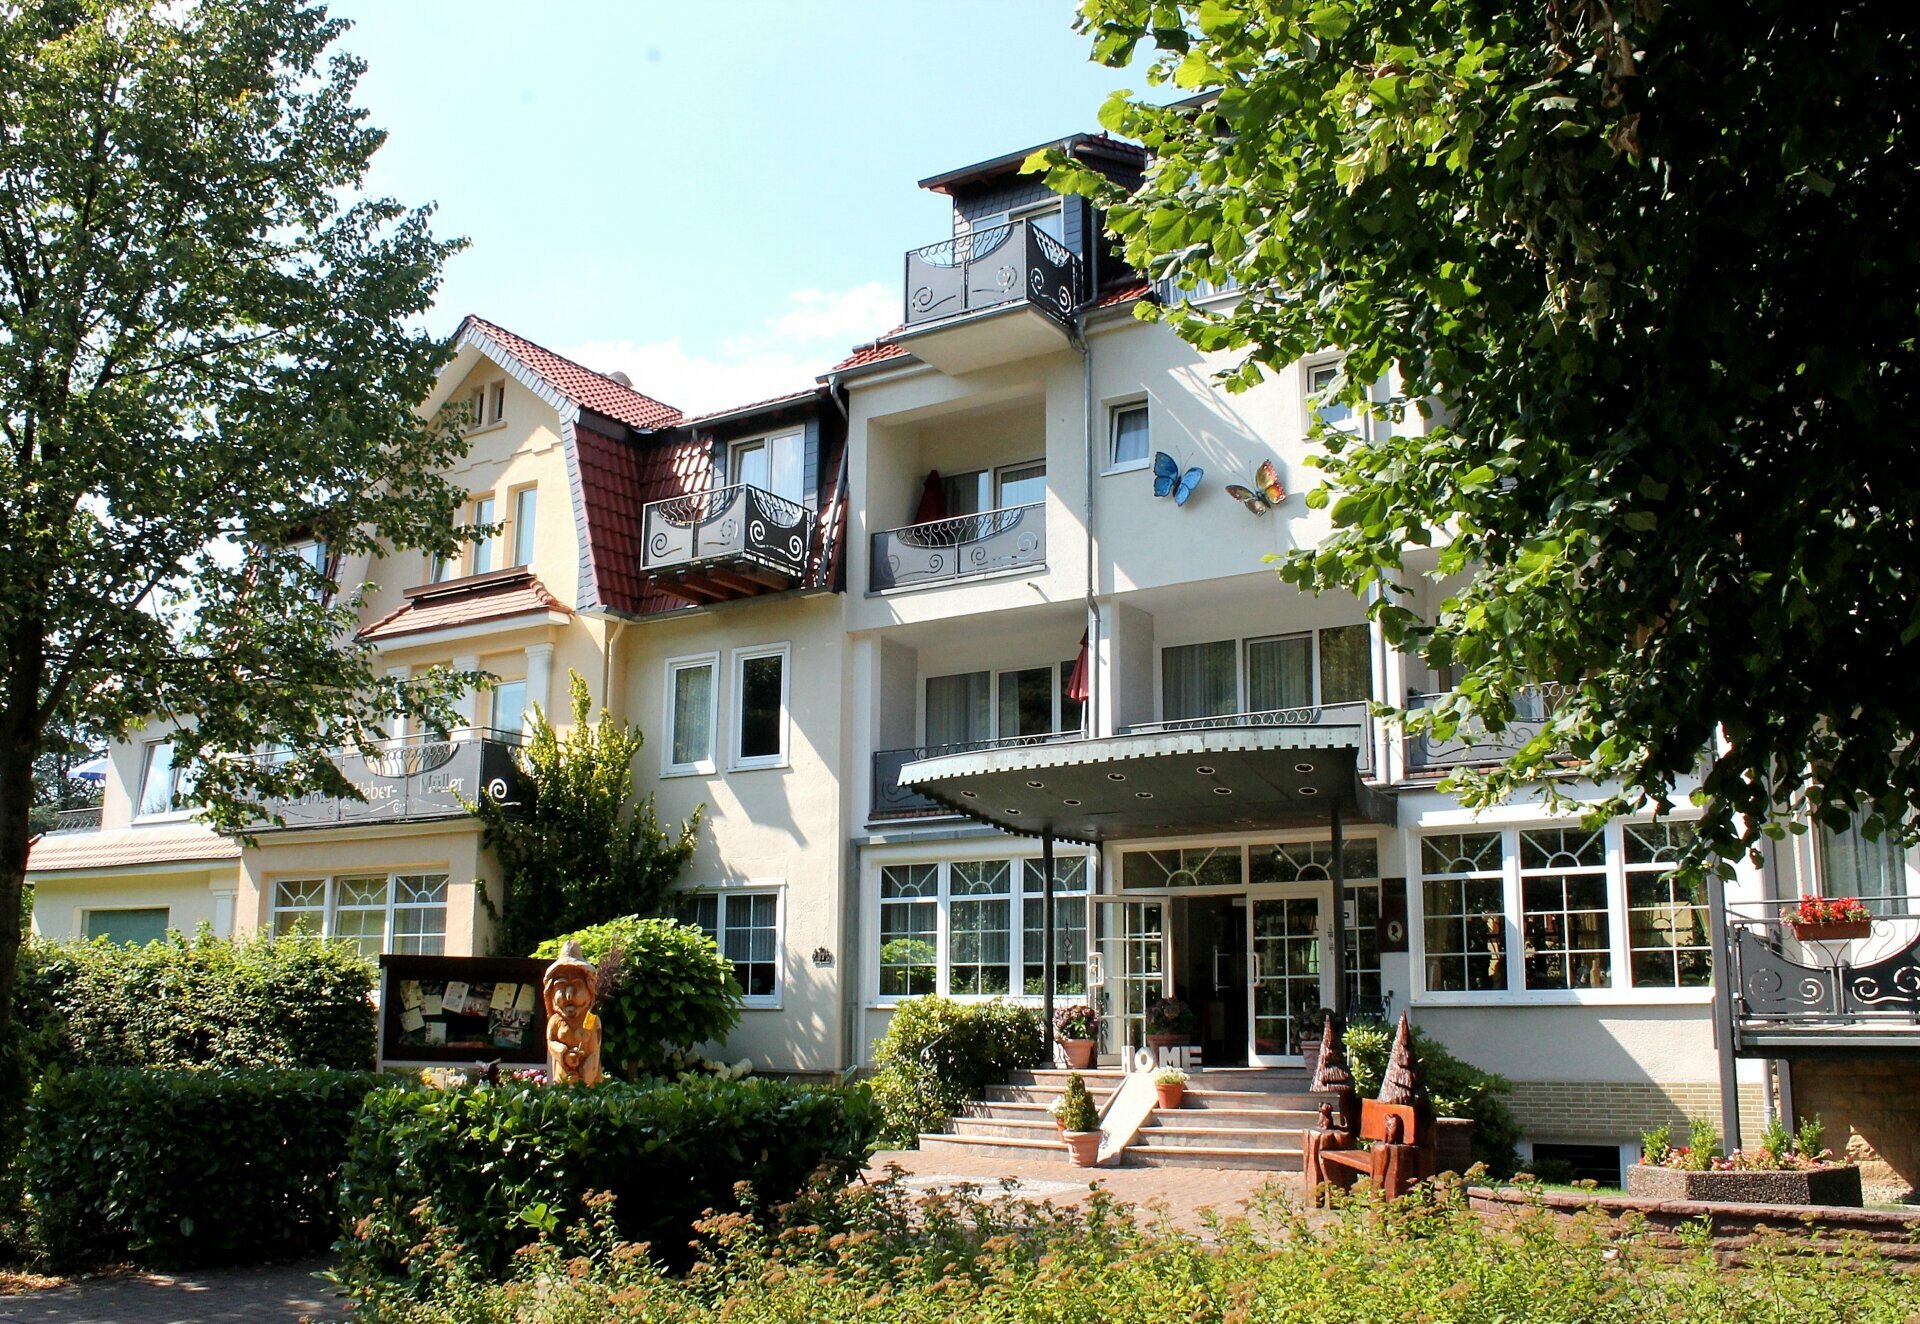 2 Tage Wellromance® – Parkhotel Weber-Müller  (4 Sterne) in Bad Lauterberg, Niedersachsen inkl. Halbpension